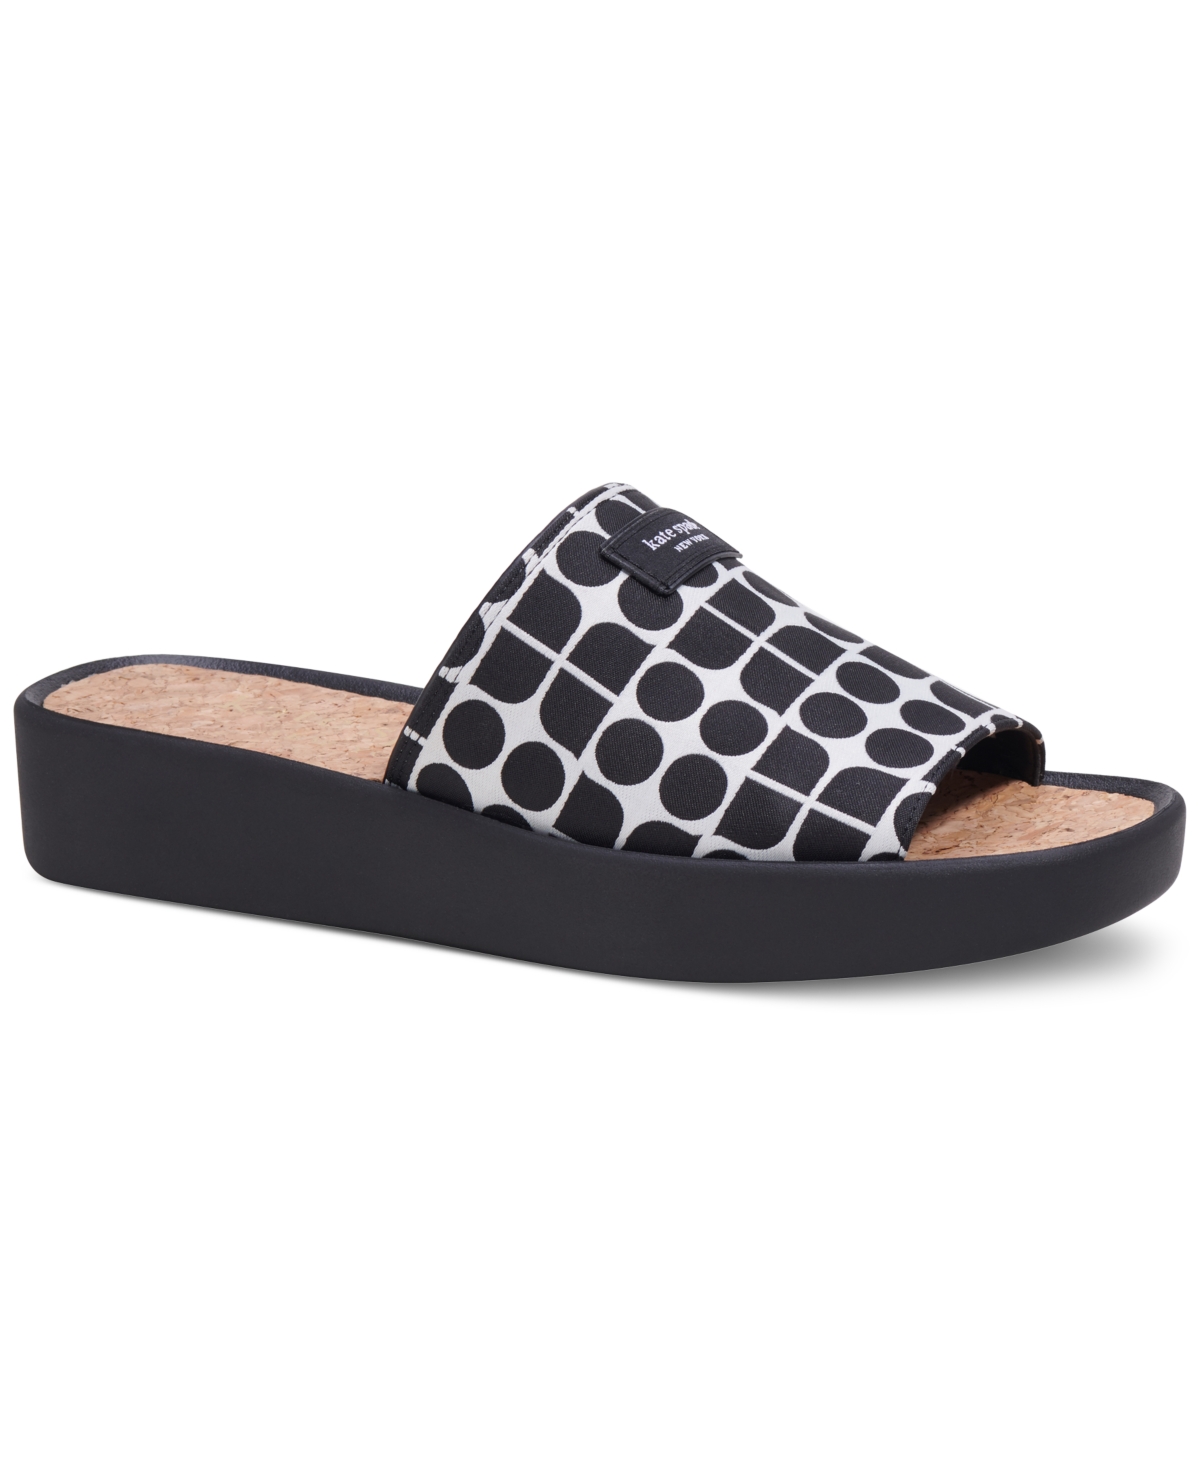 Women's Spree Slide Flat Sandals - Cream, Black